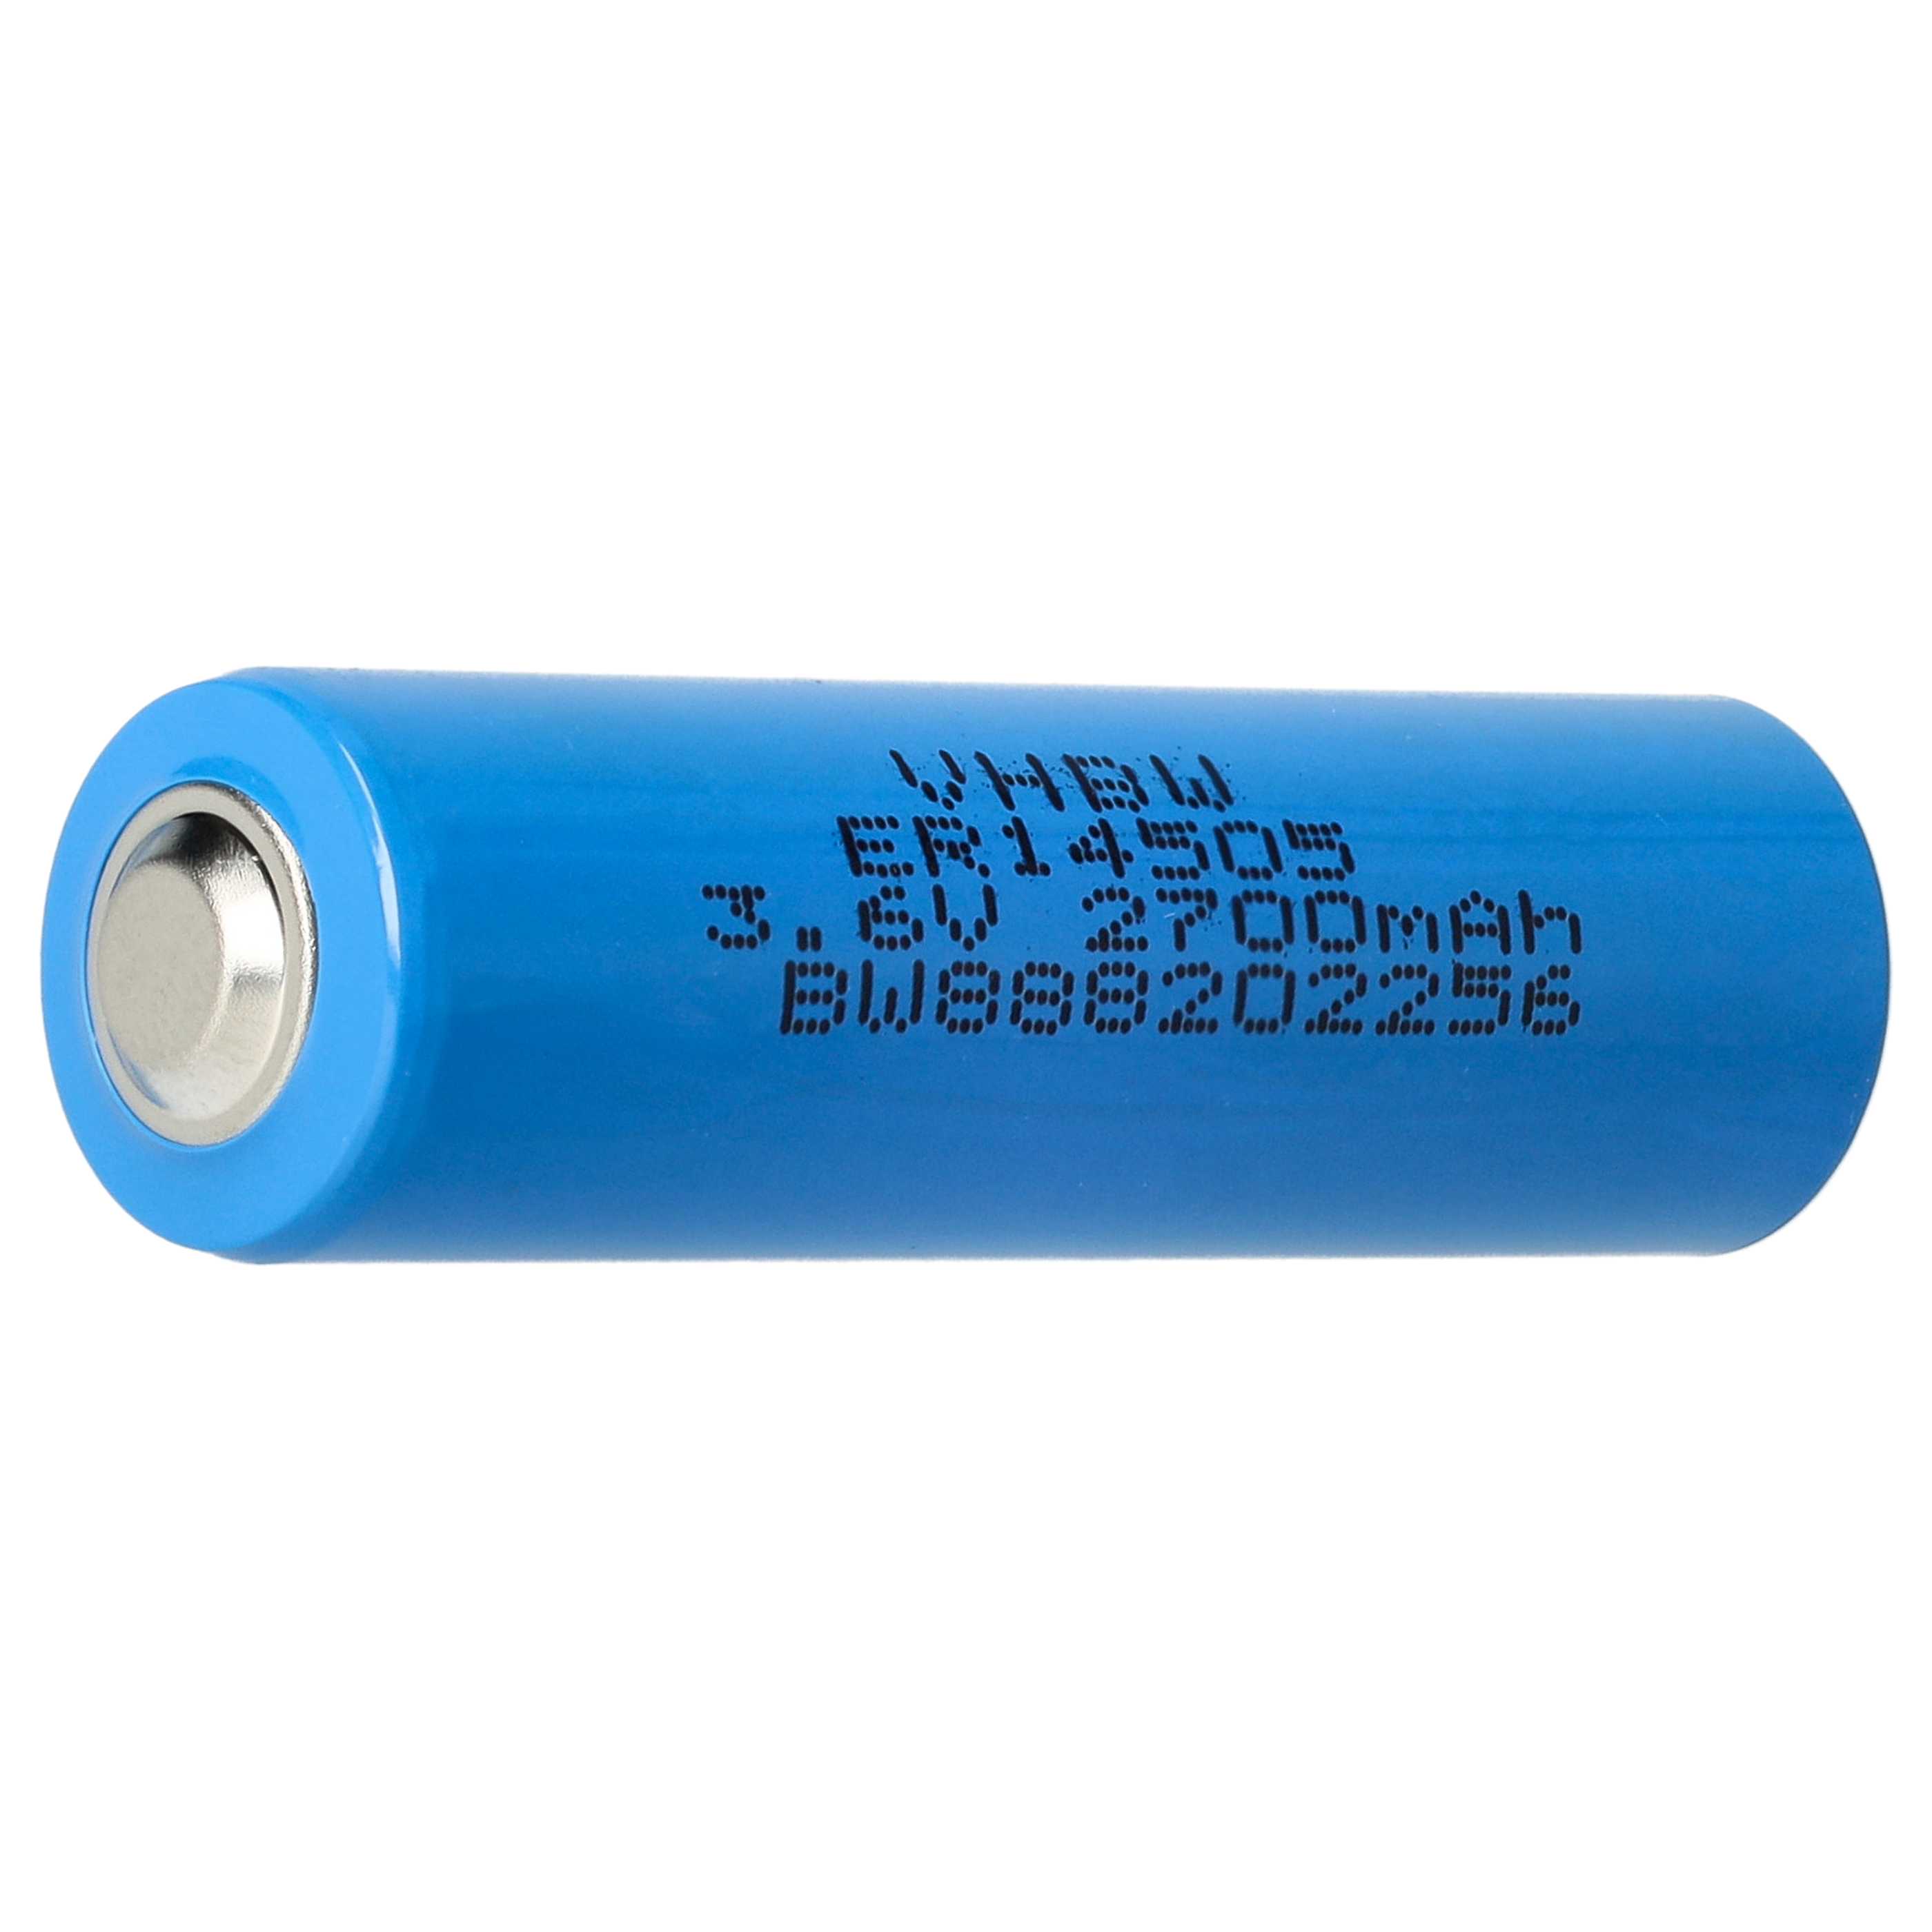 Bateria ER14250 Viessmann Trimatik, Trimatik 2 - 2700 mAh 3,6 V Li-SOCl2